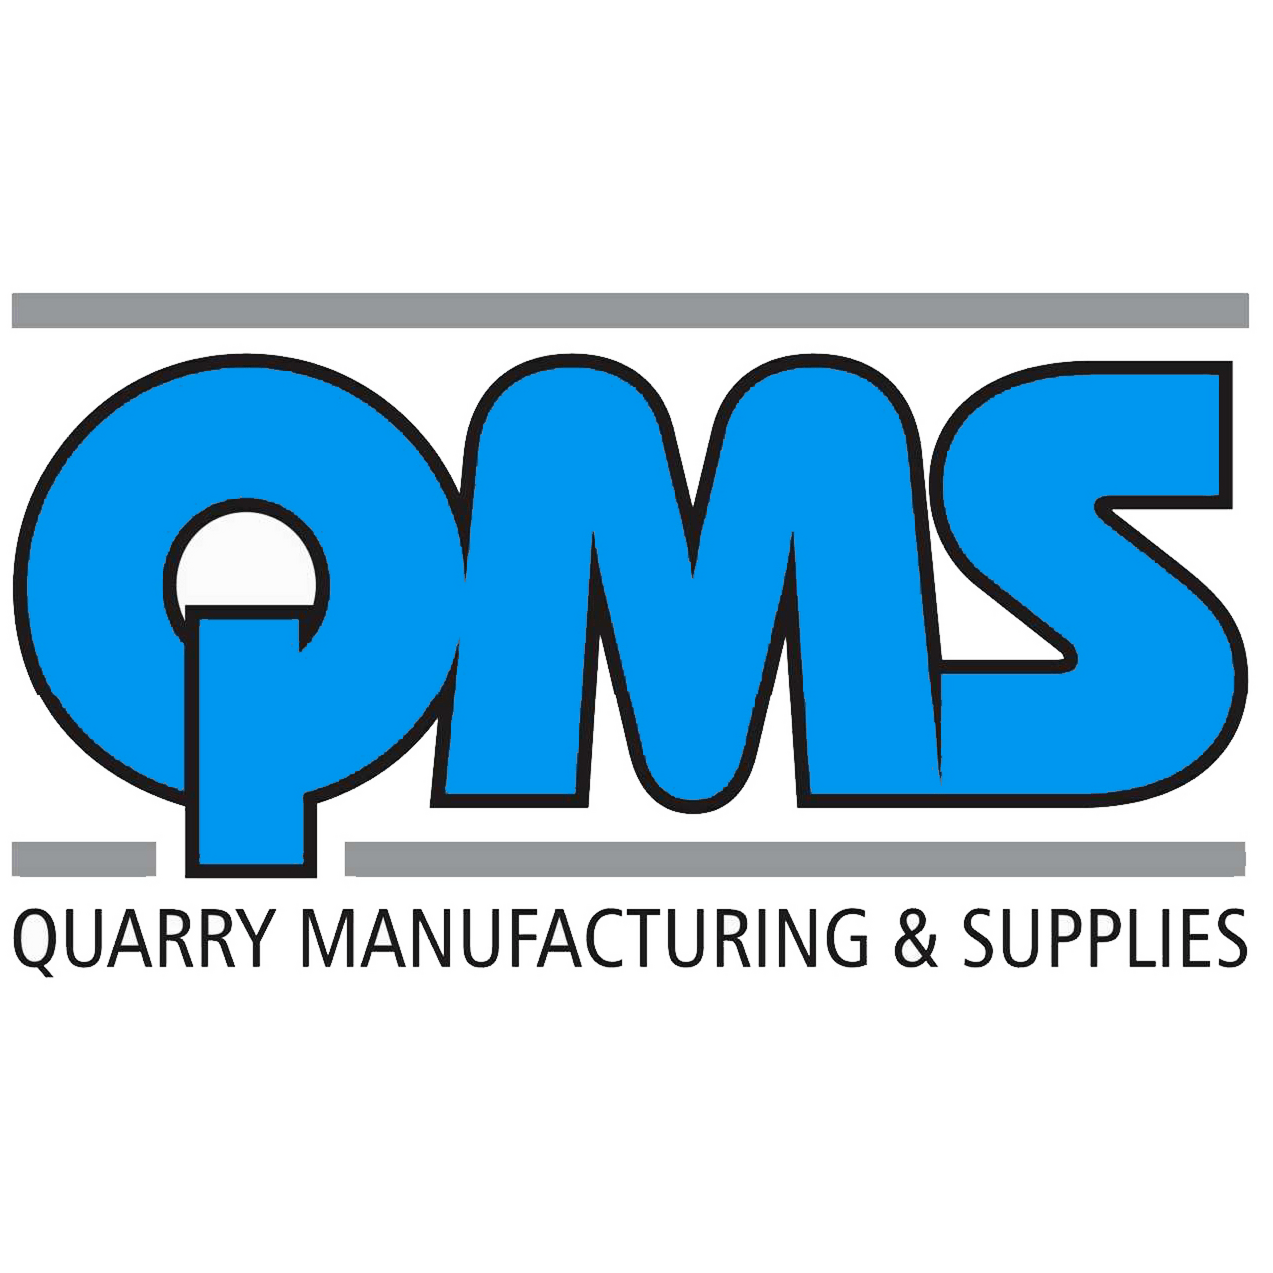 Quarry Manufacturing & Supplies Ltd